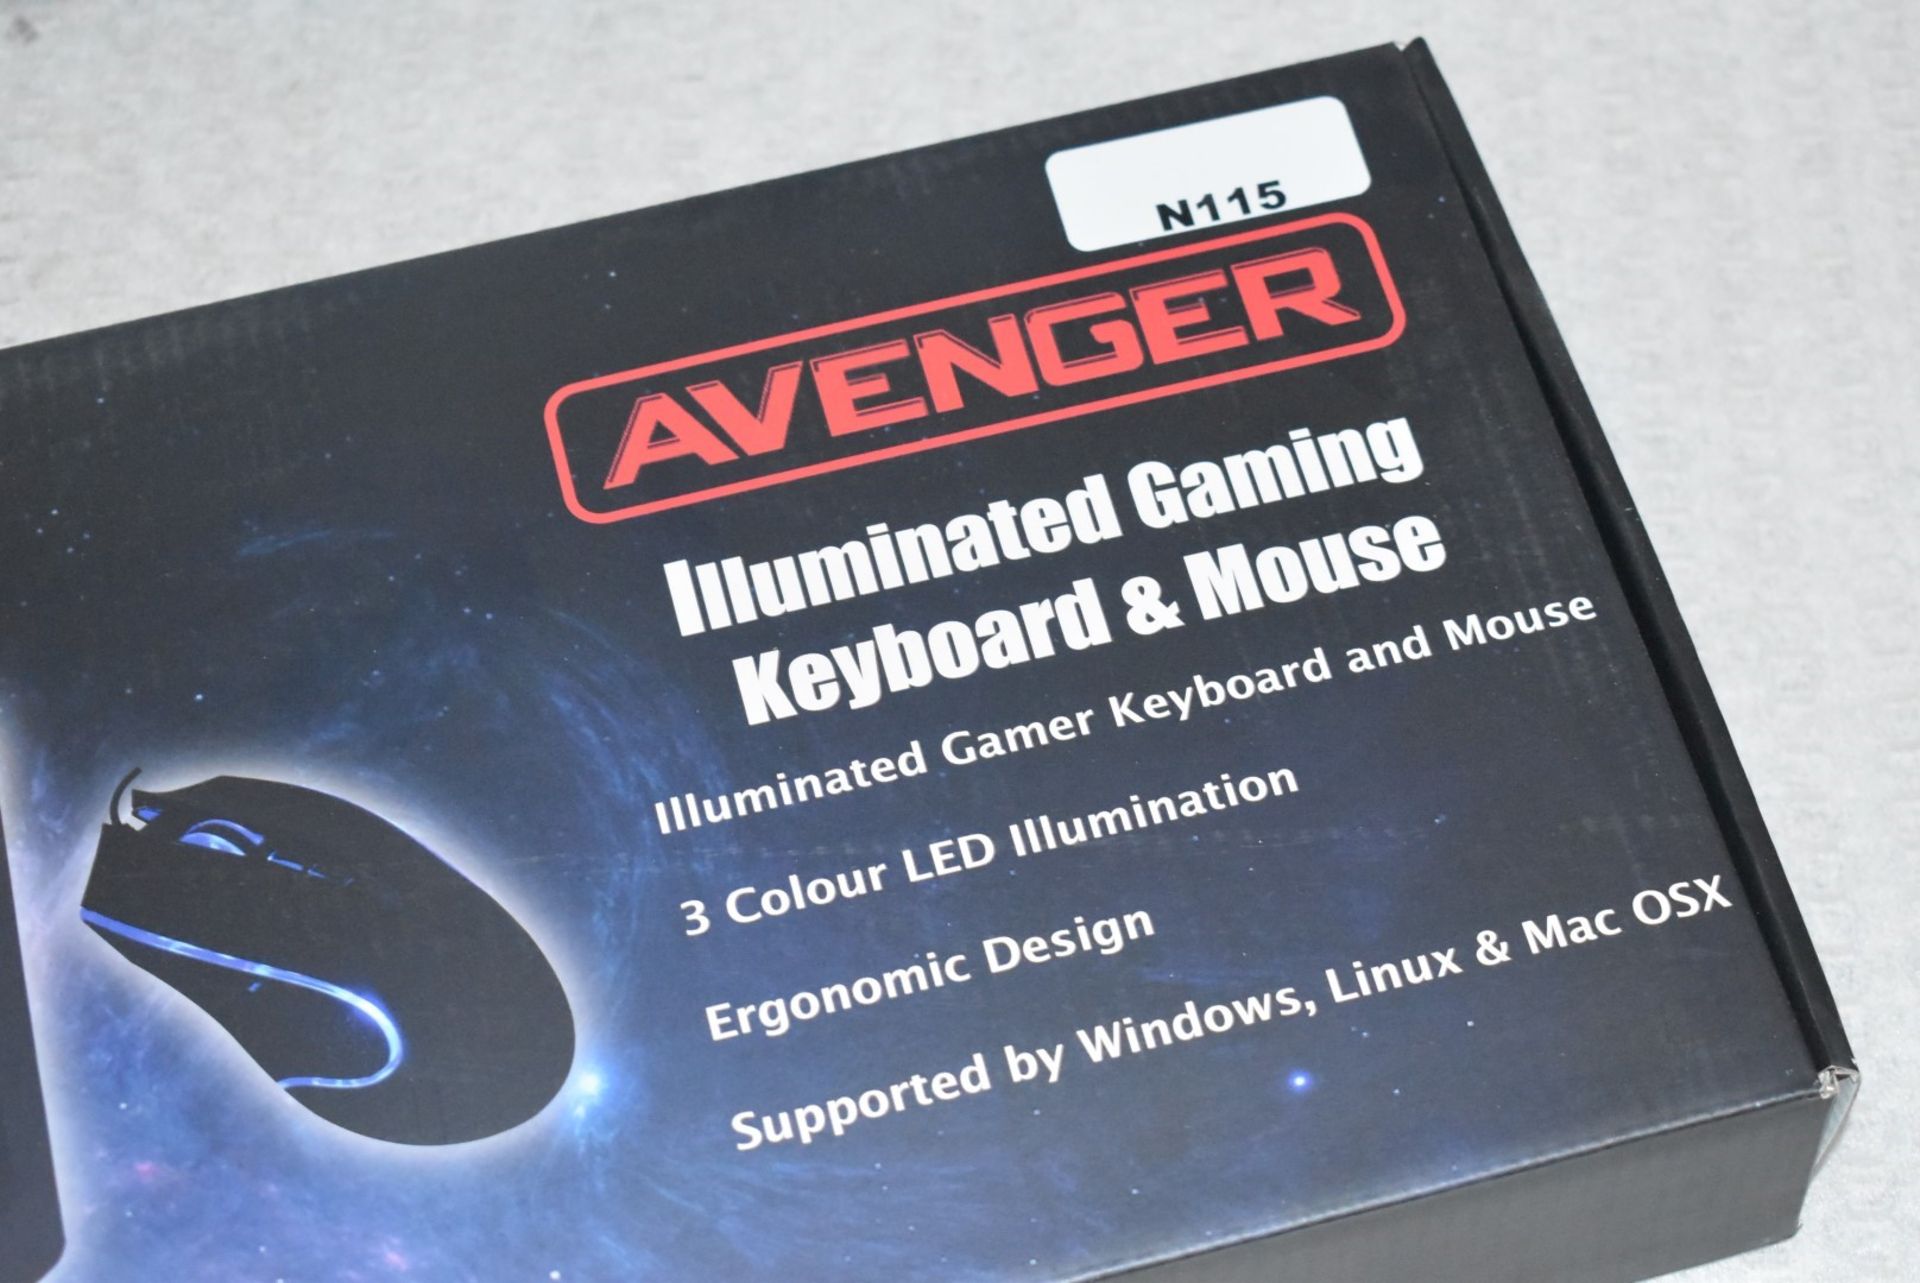 1 x CIT Avenger Illuminated Gaming Keyboard and Mouse - New & Boxed - Image 2 of 2